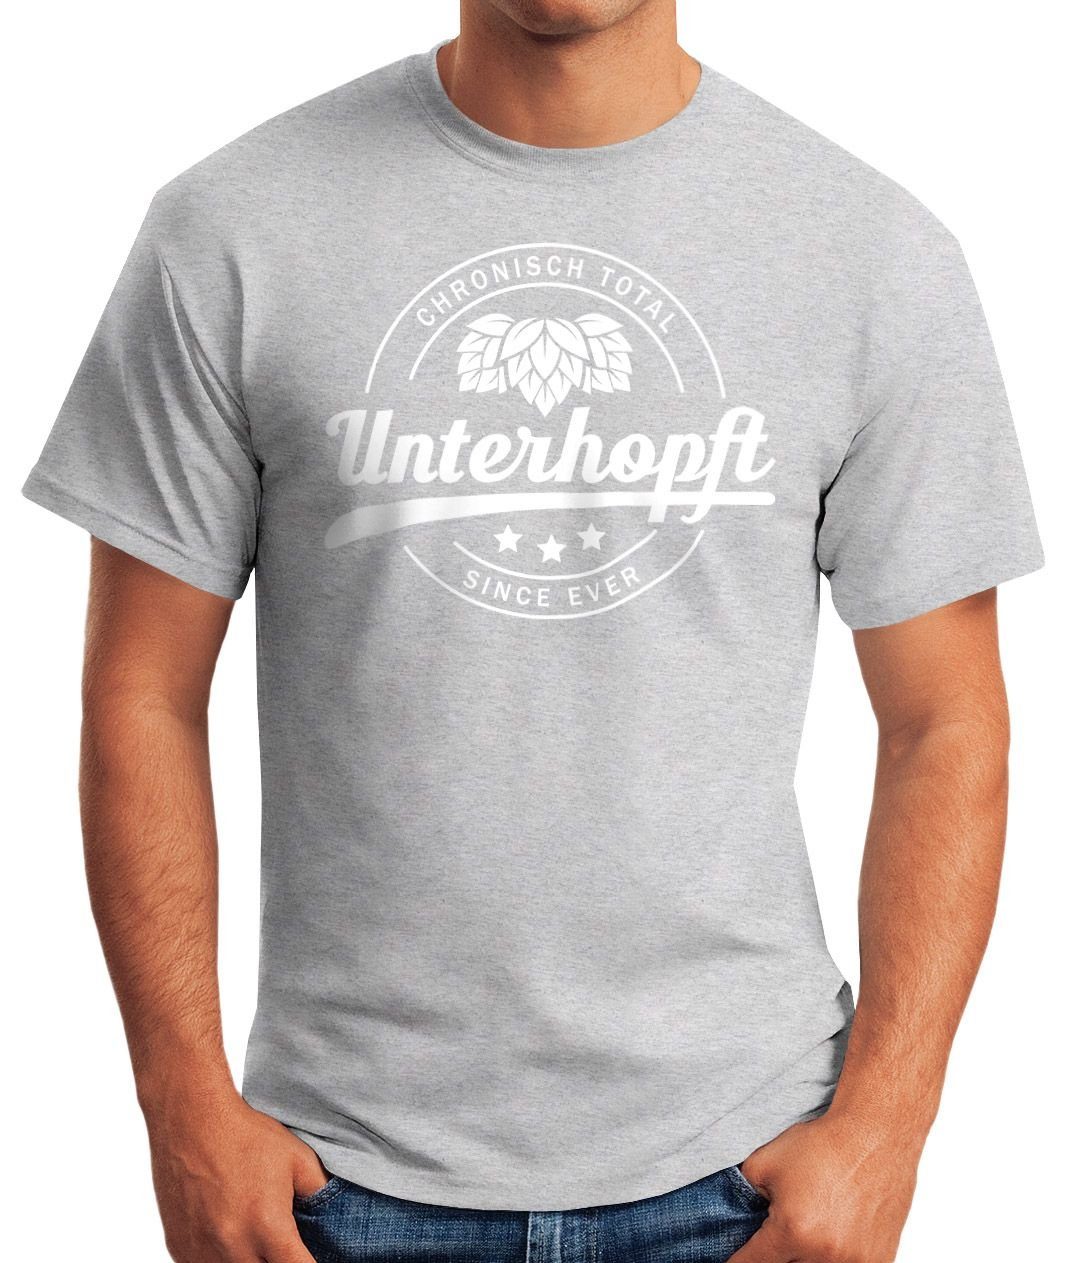 mit Herren Print Print-Shirt Ever T-Shirt Moonworks® grau Unterhopft MoonWorks Since Chronisch Total Fun-Shirt